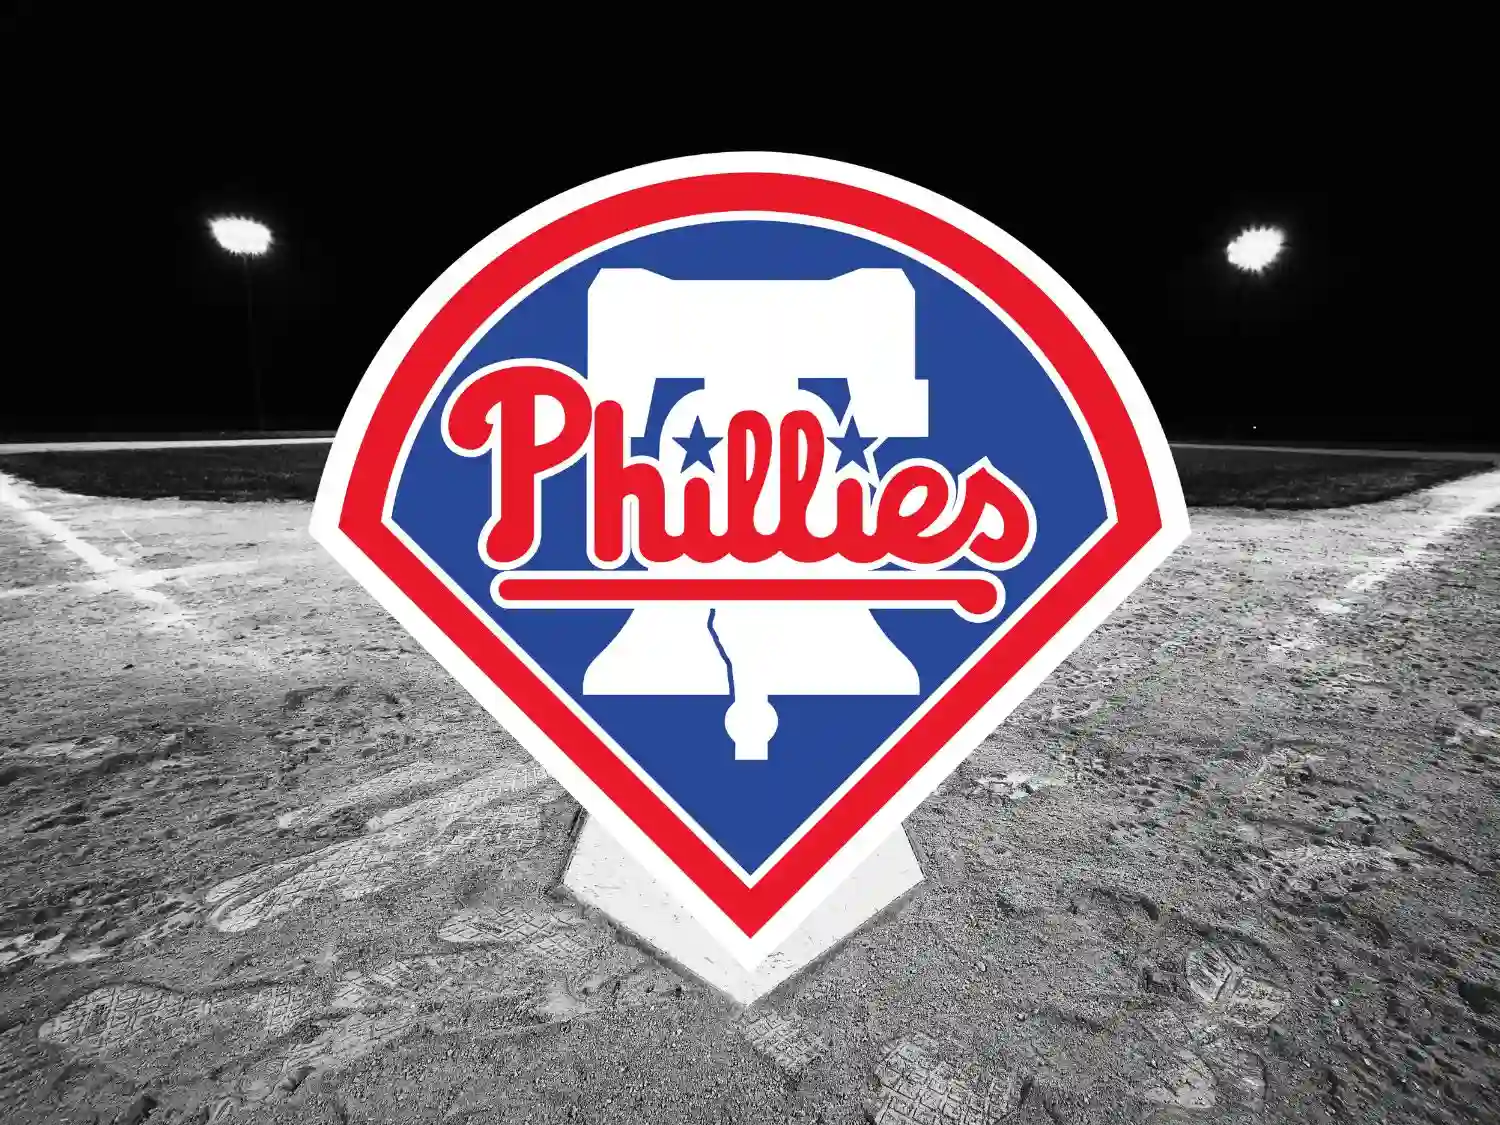 Philadelphia Phillies Tickets and Seats